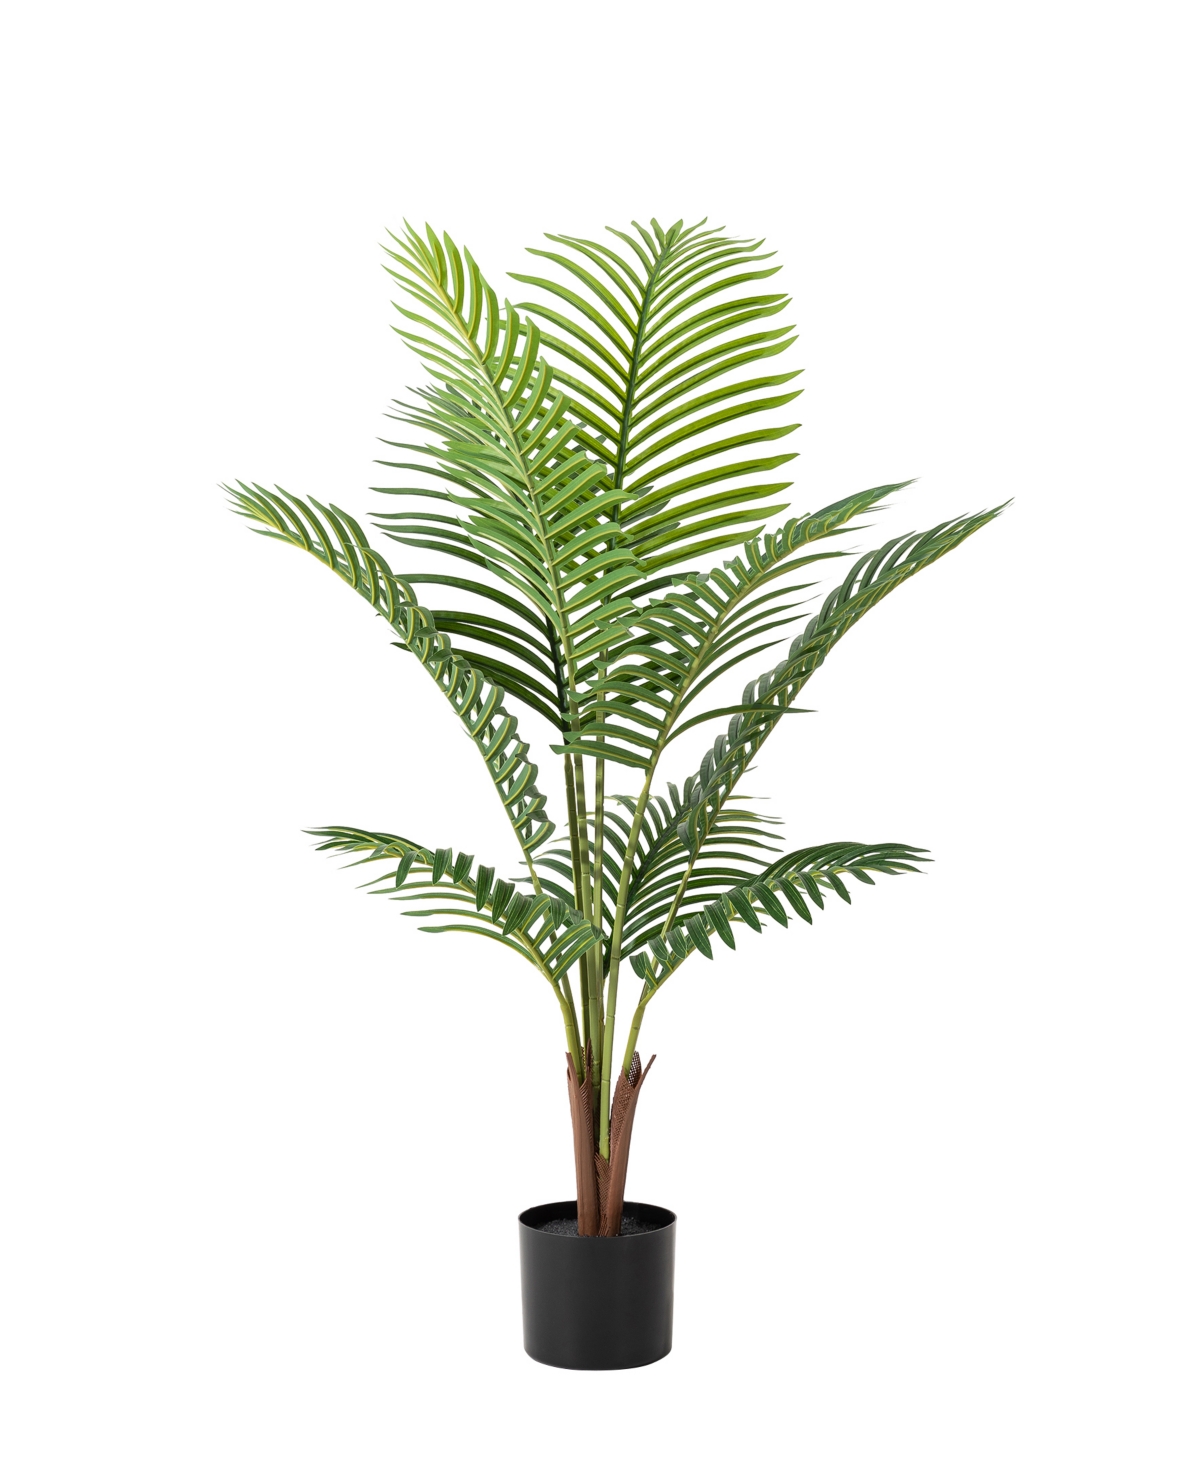 3.5ft. Faux Areca Palm Tree in Pot - Multi